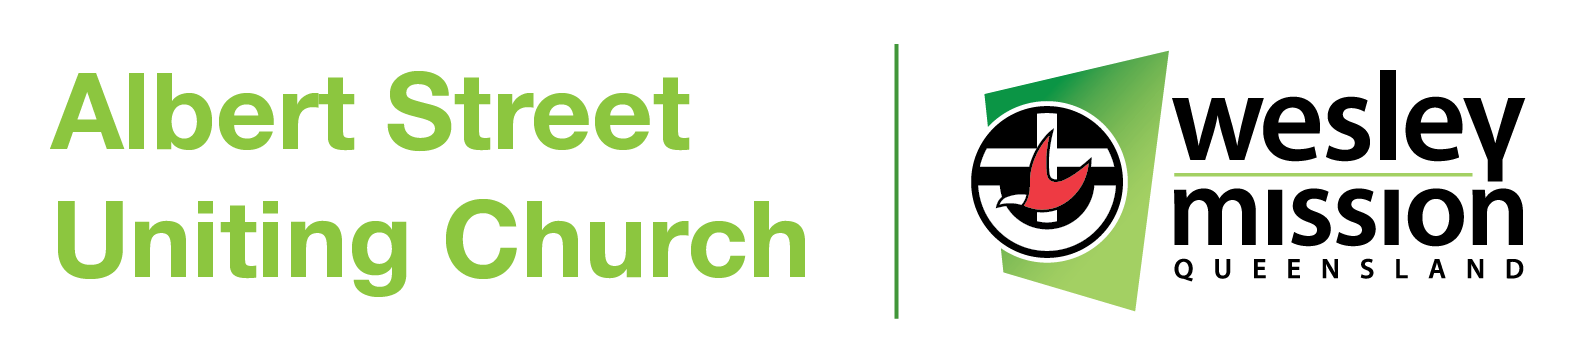 Albert Street Uniting Church logo